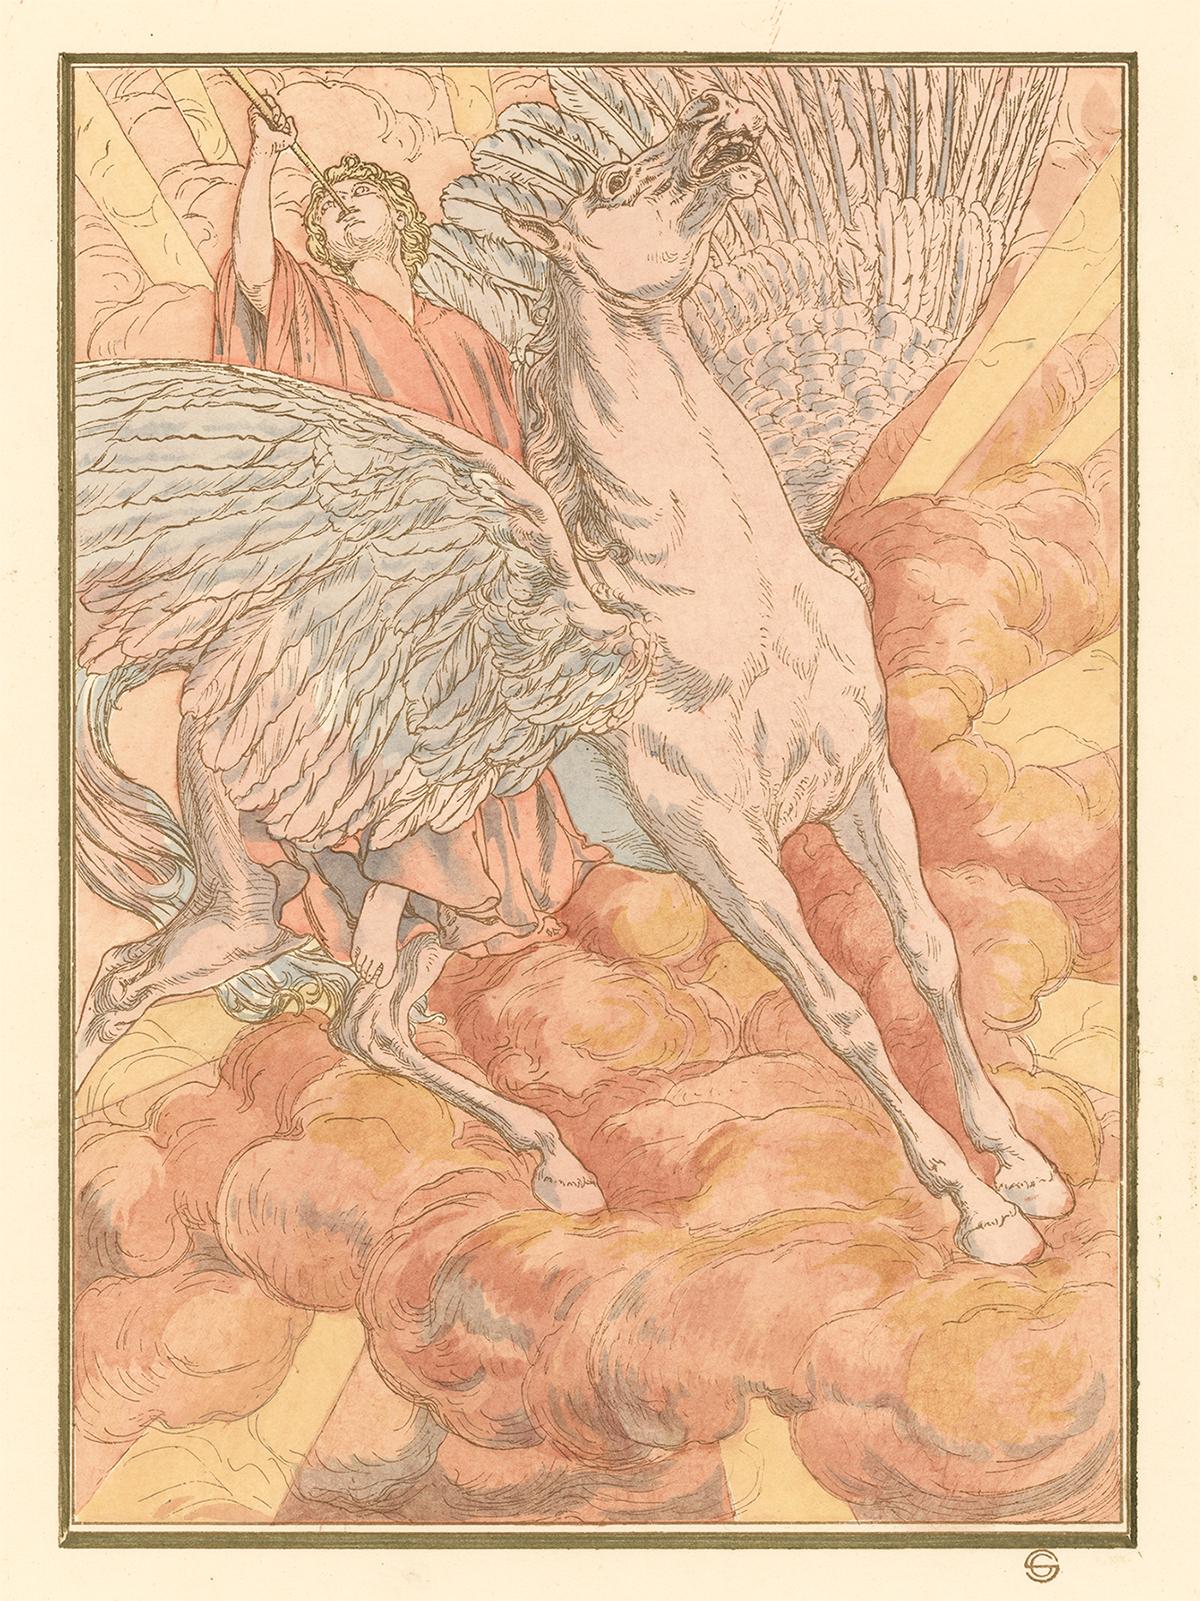 Horse Swan, Hésperus by Carlos Schwabe, Symbolist fantasy lithograph, 1904